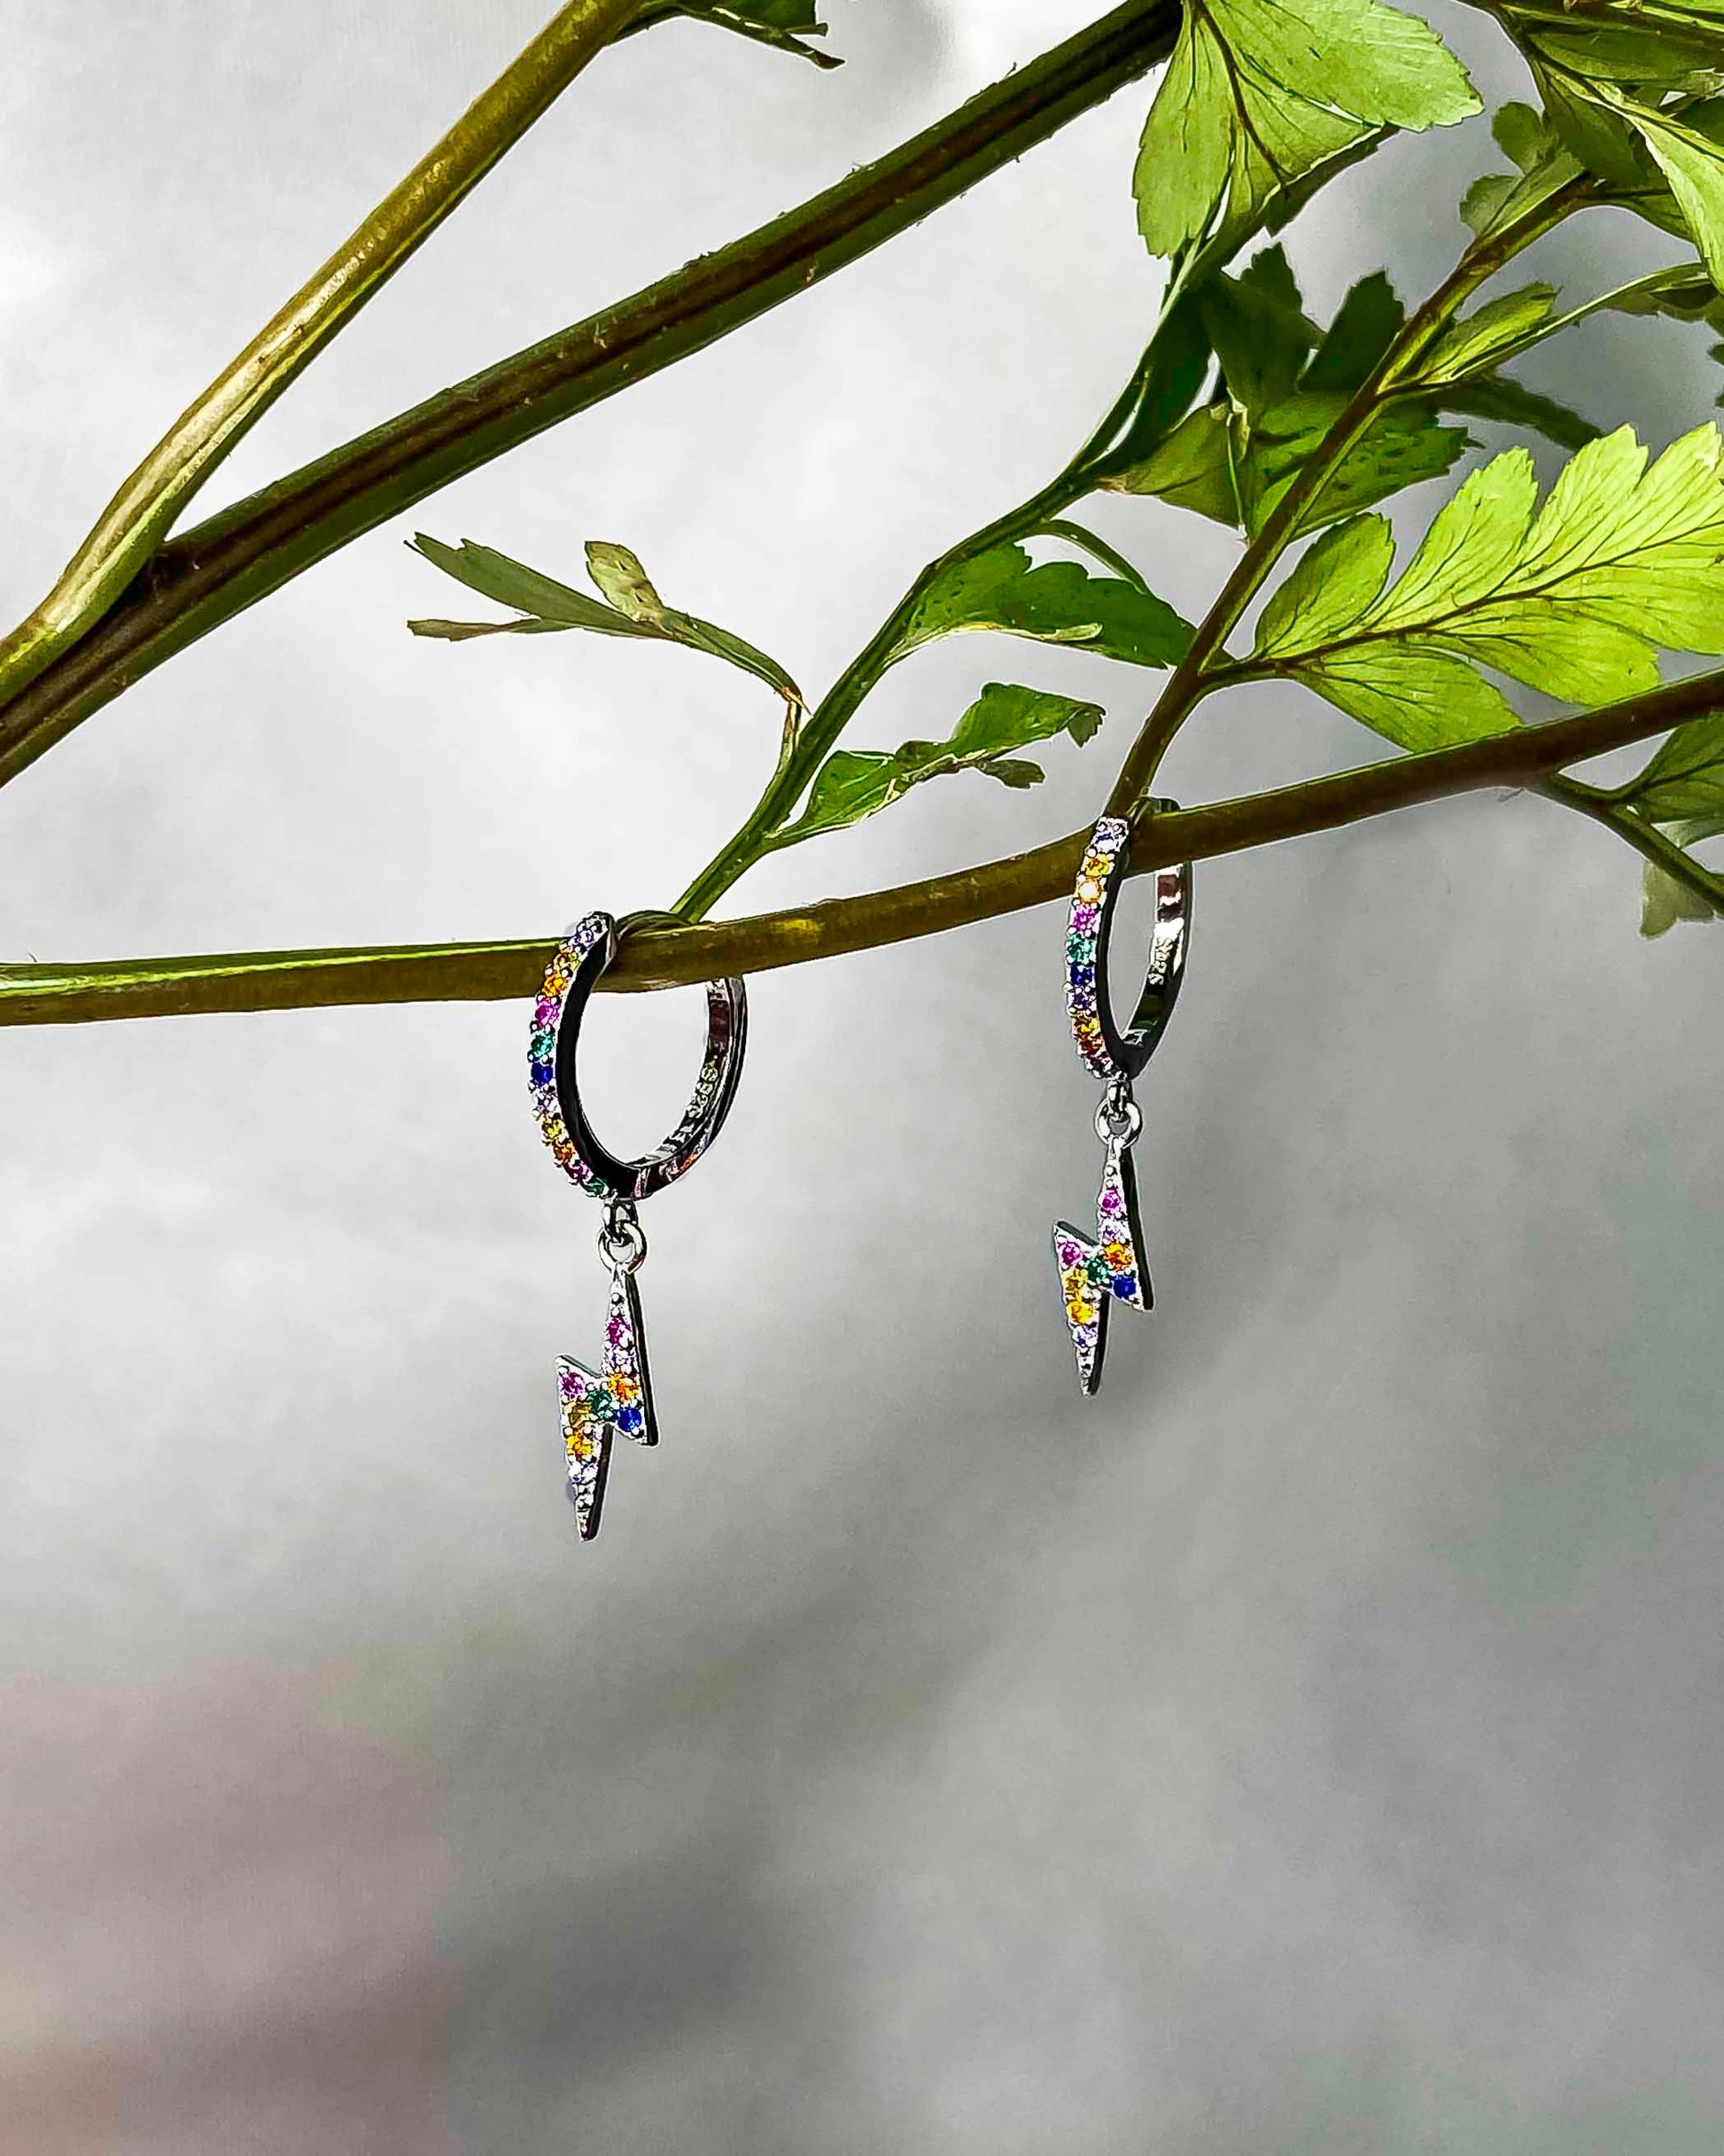  925 sterling silver huggie hoop lighting bolt earrings with multicolored zirconia stones.